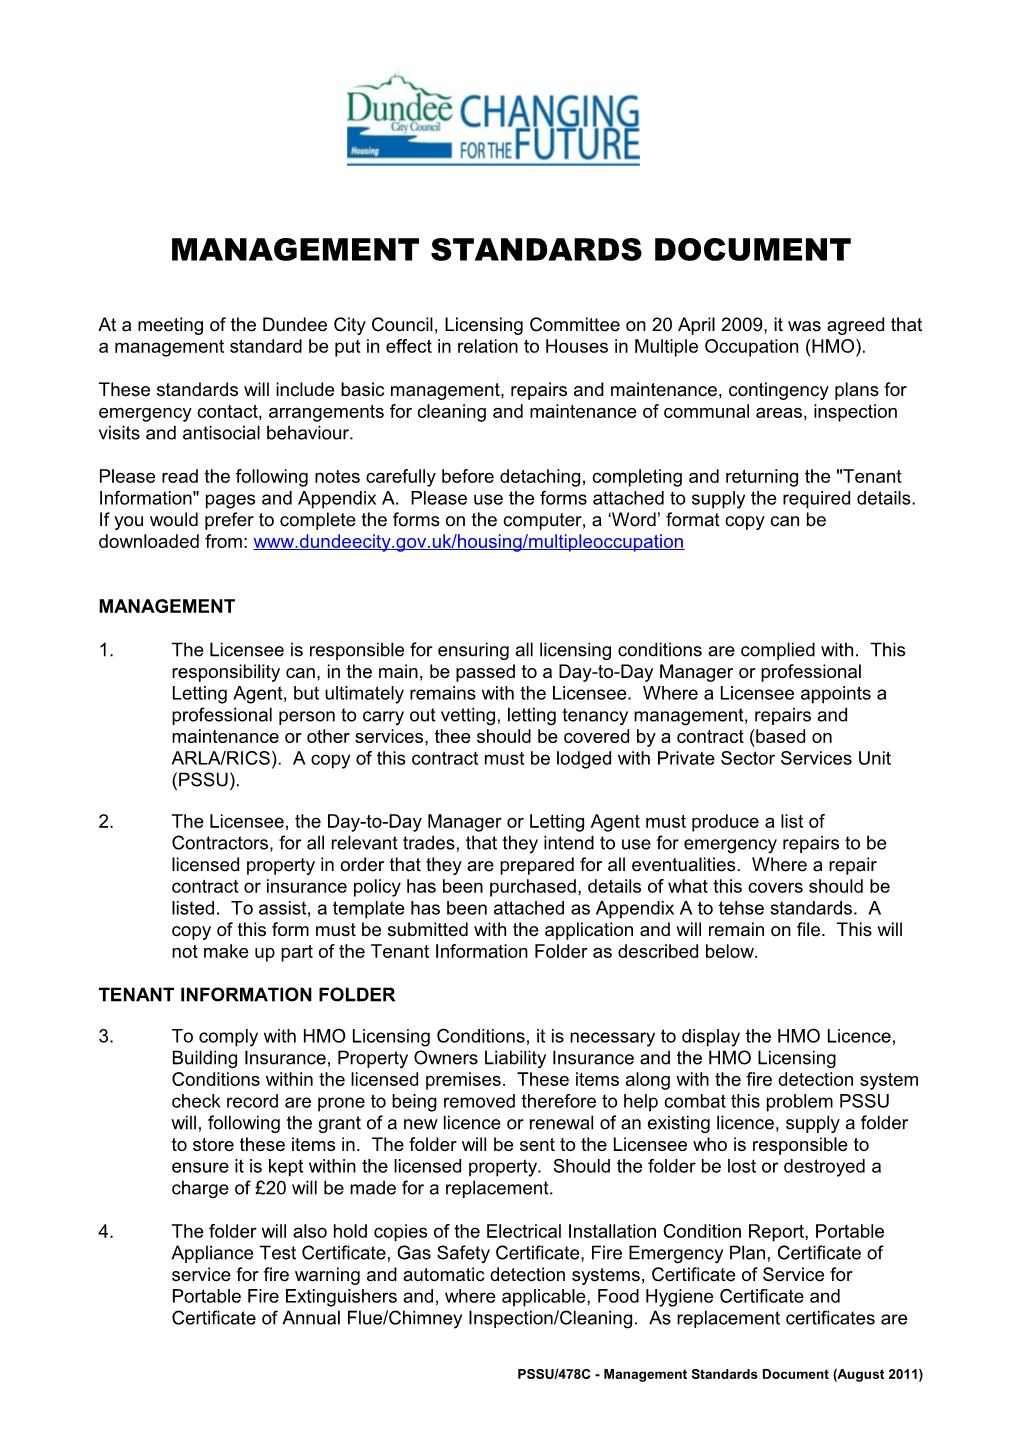 Management Standards Document